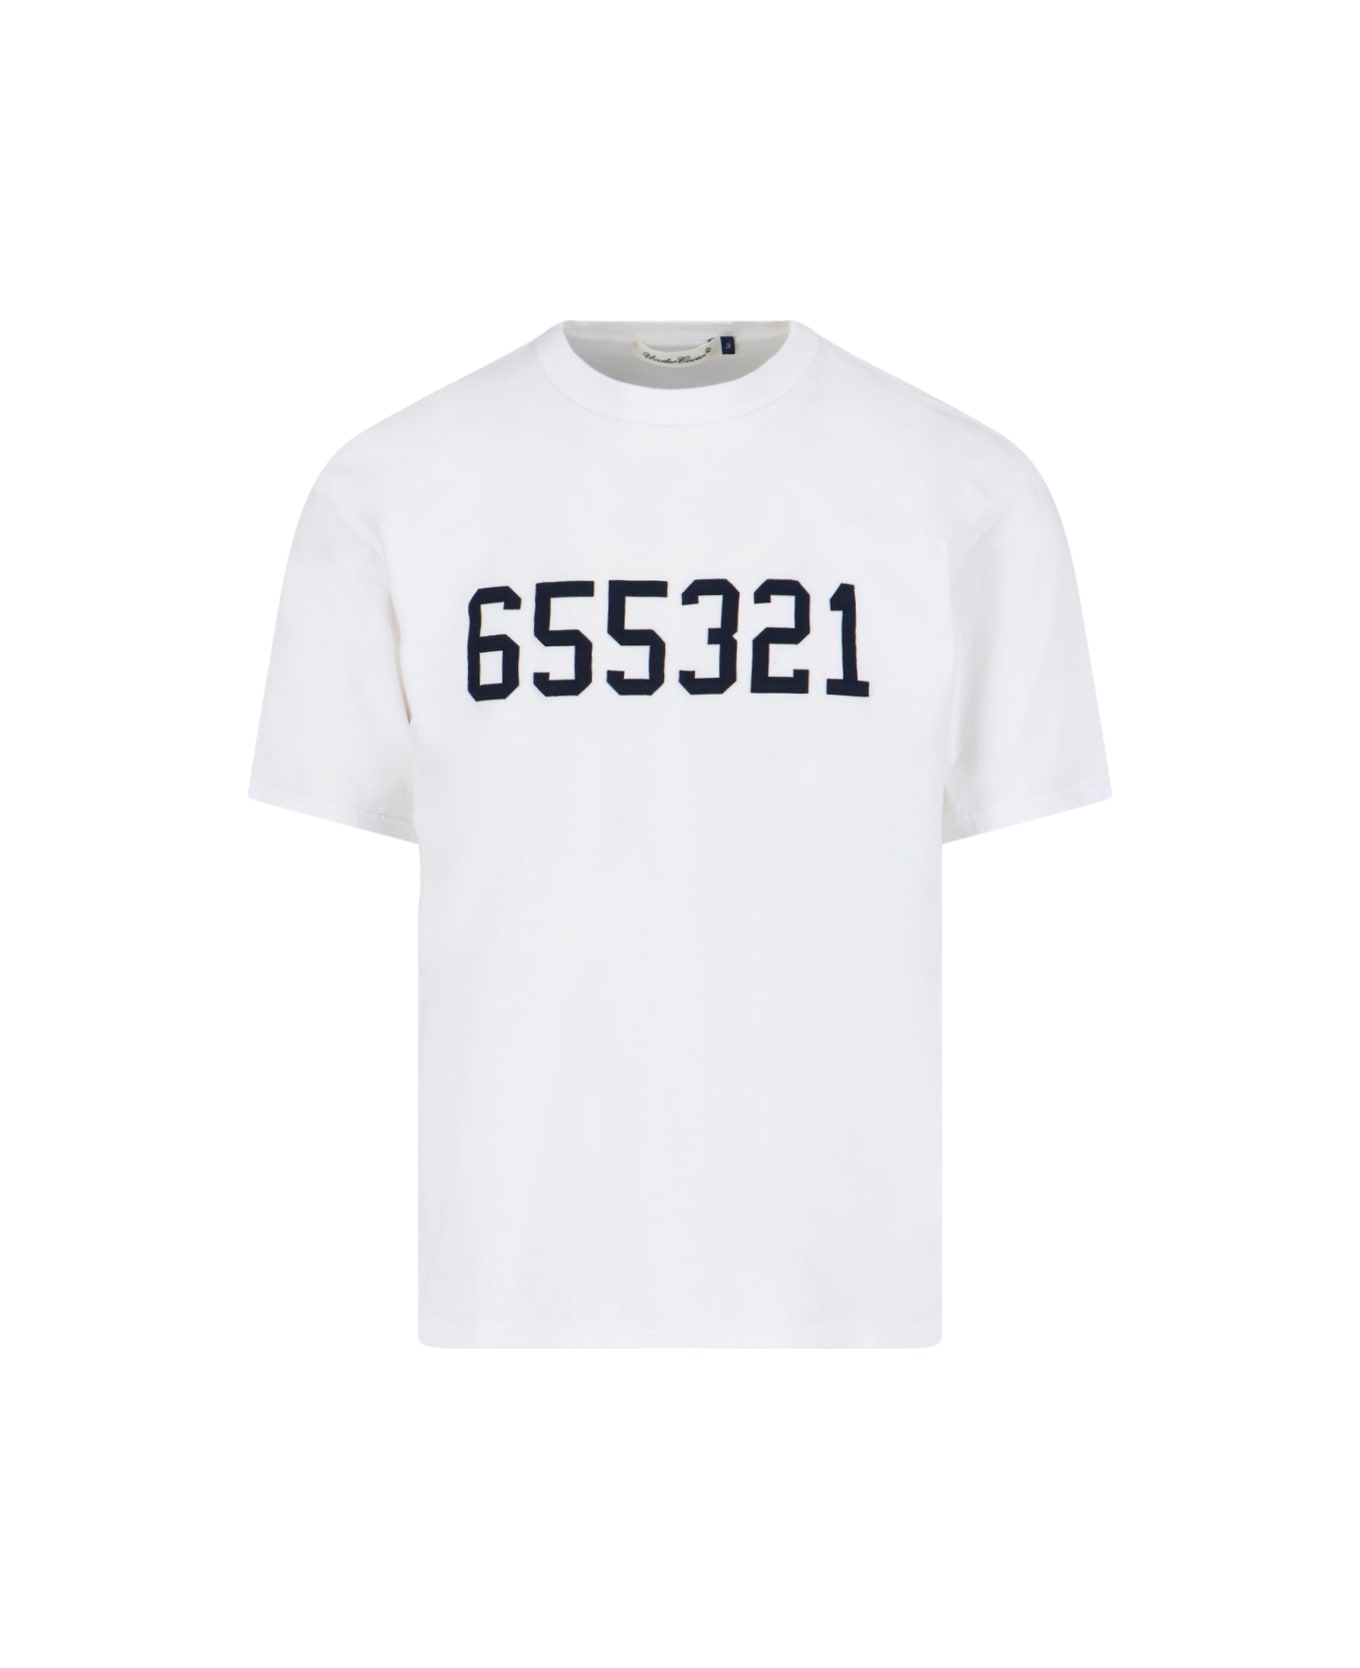 Undercover Jun Takahashi '655321' T-shirt - White シャツ